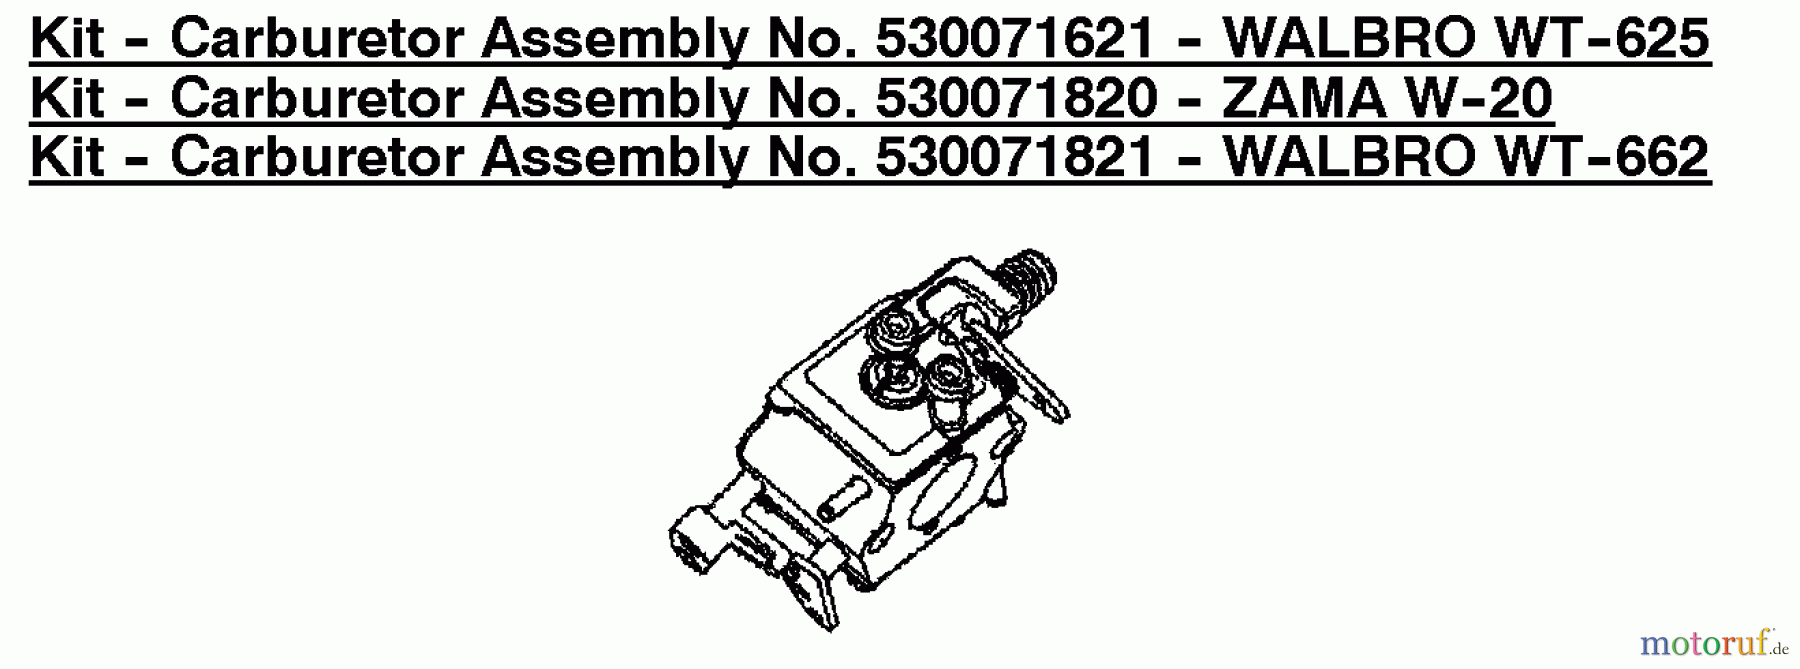  Poulan / Weed Eater Motorsägen PP220 (Type 4) - Poulan Pro Chainsaw Kit - Carburetor Assembly